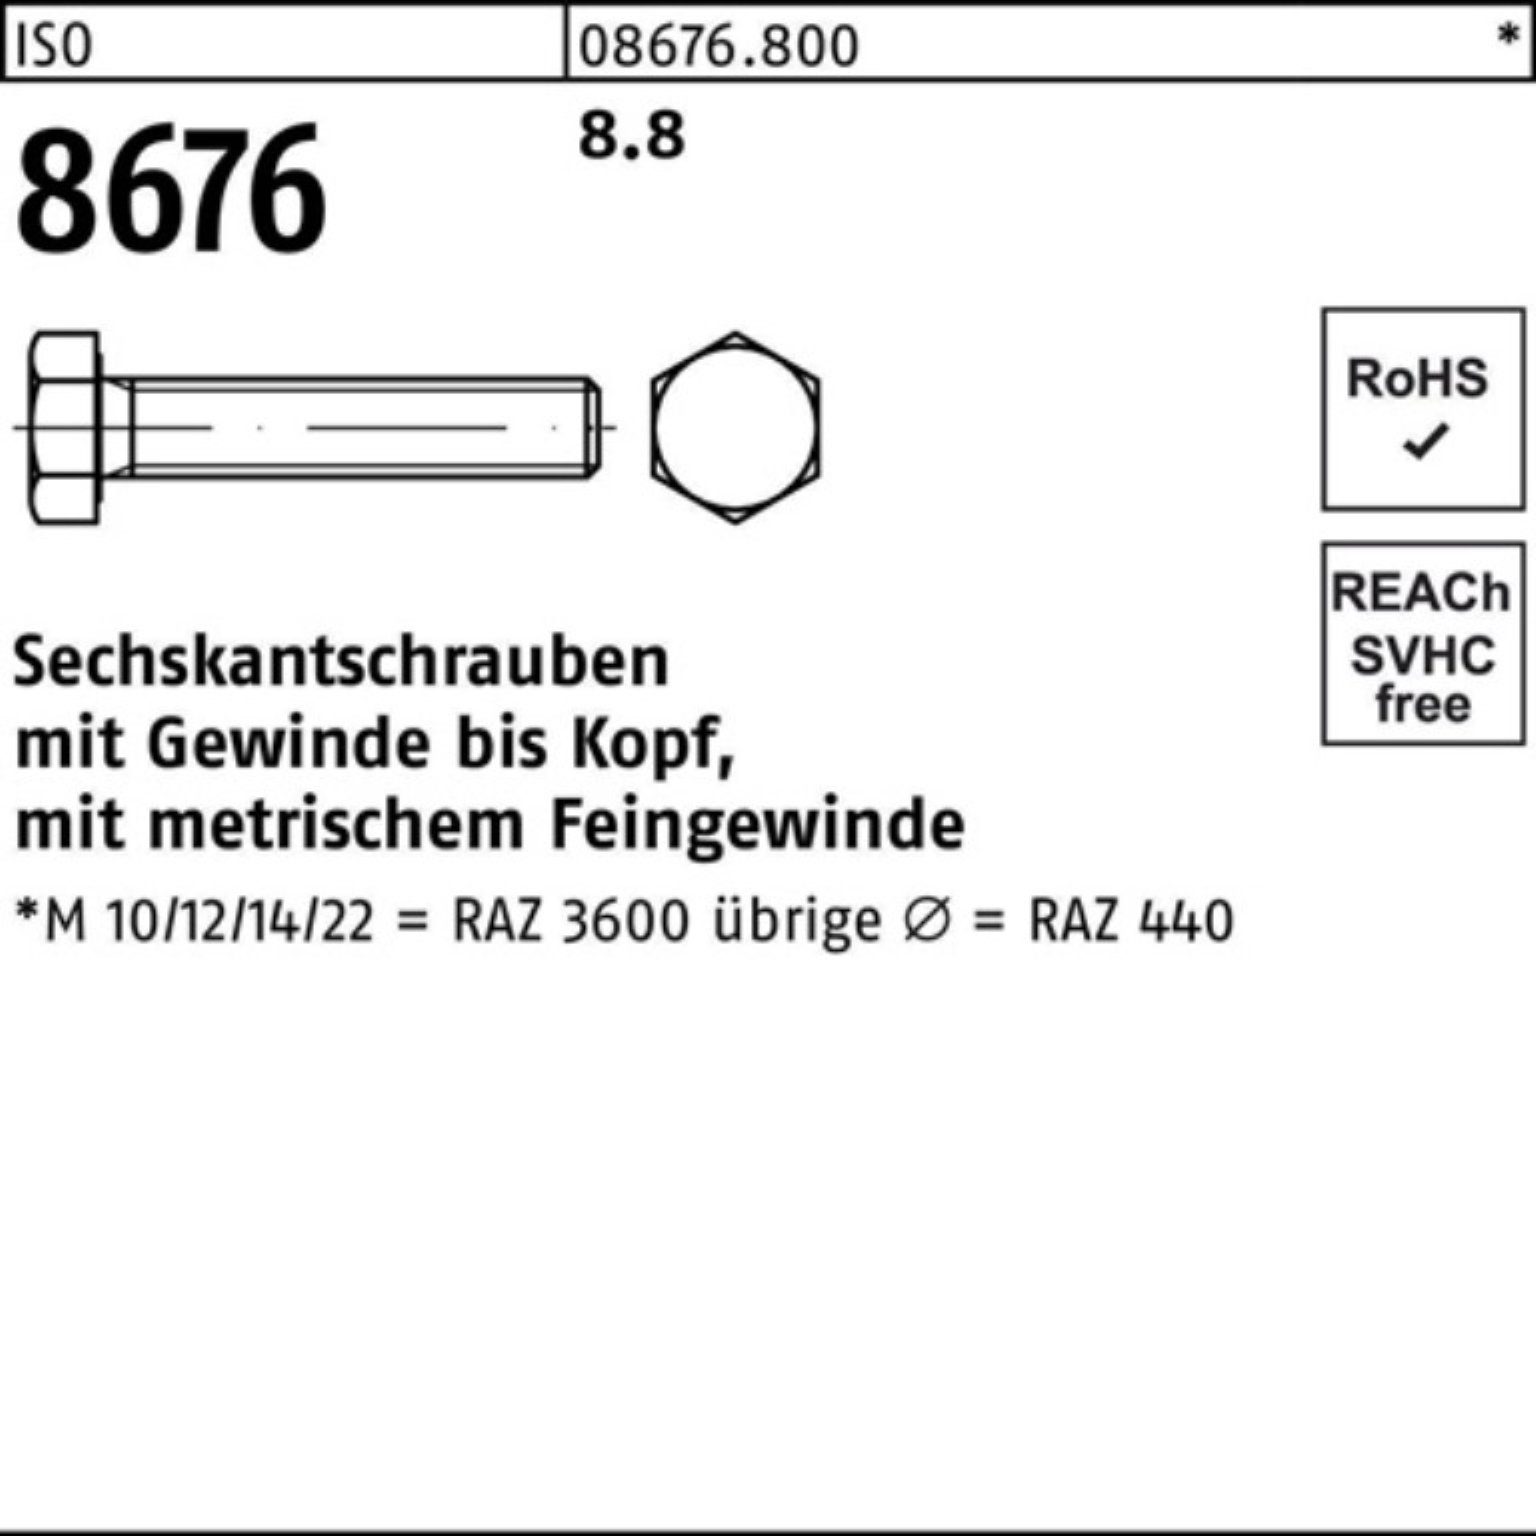 Reyher Sechskantschraube 100er Pack Sechskantschraube I M10x1,25x 8.8 60 100 8676 VG ISO Stück